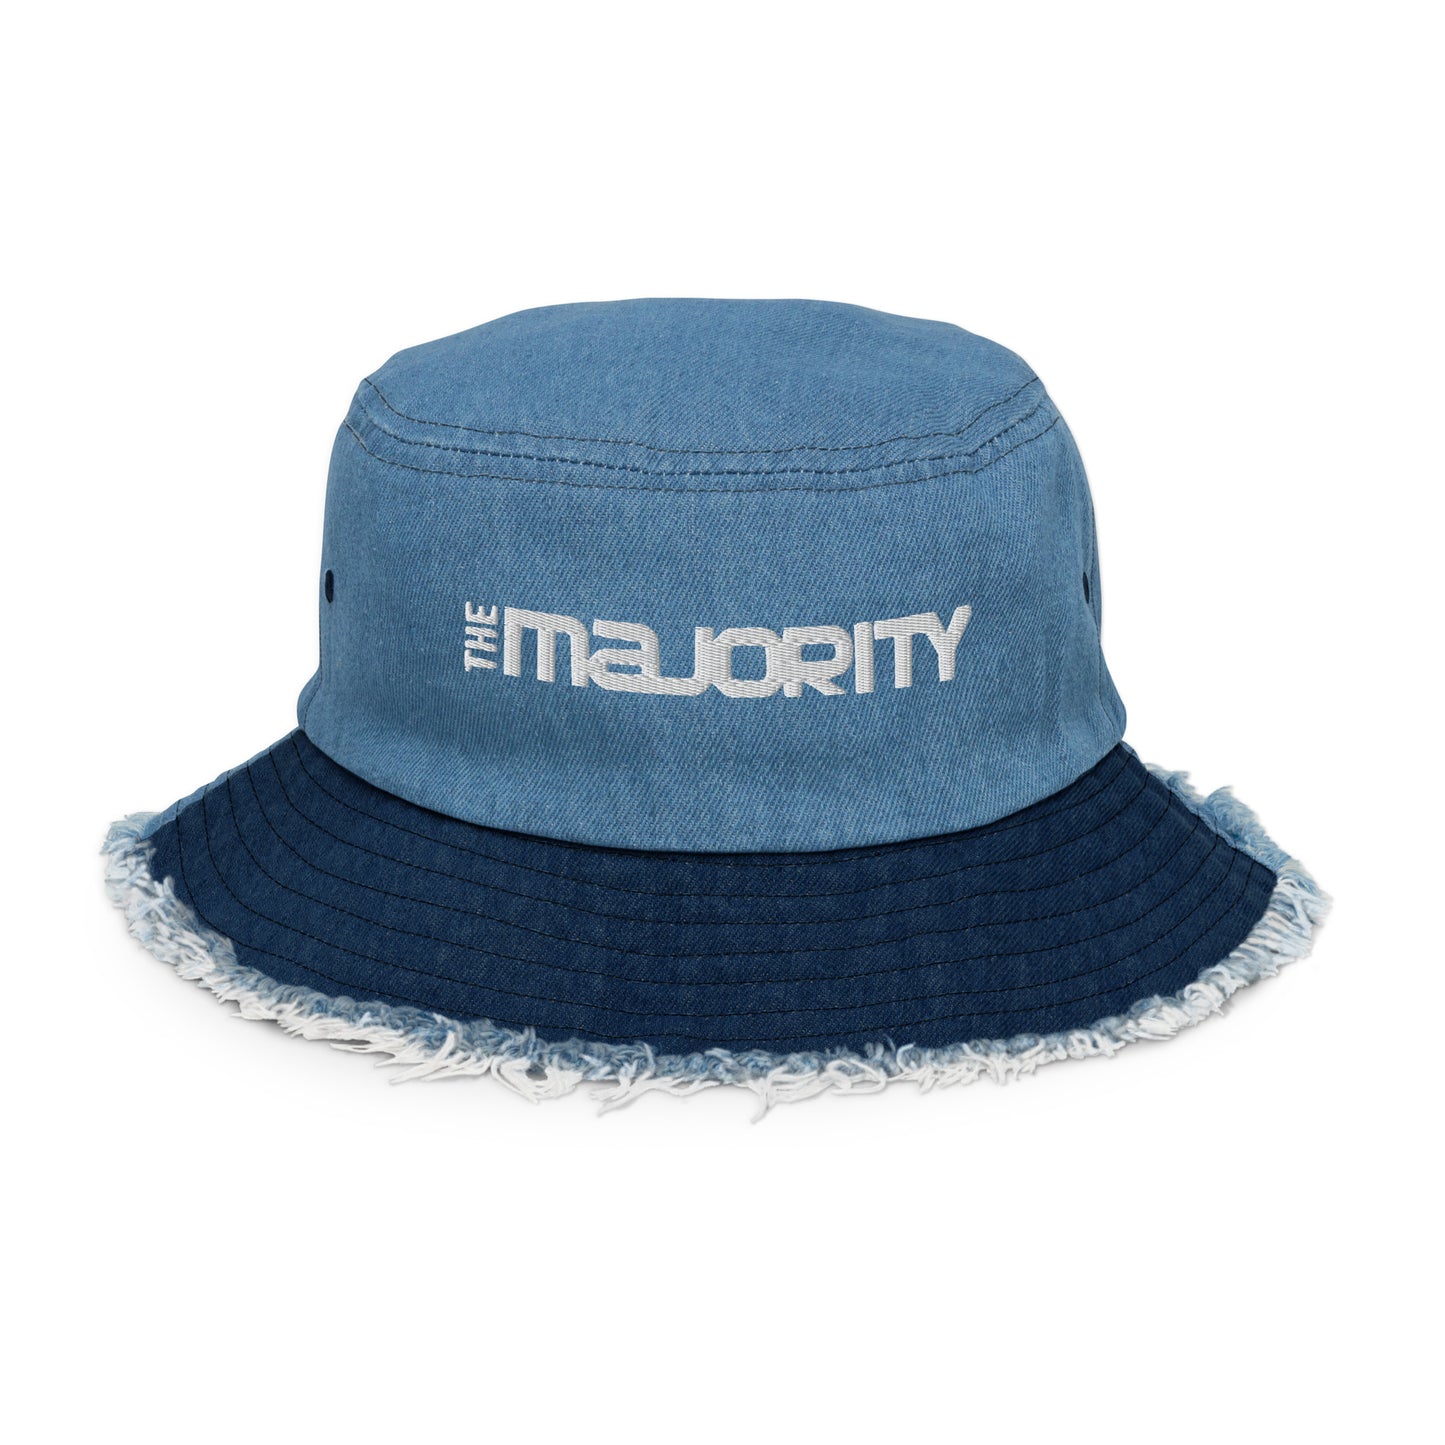 TM Logo - Distressed denim bucket hat